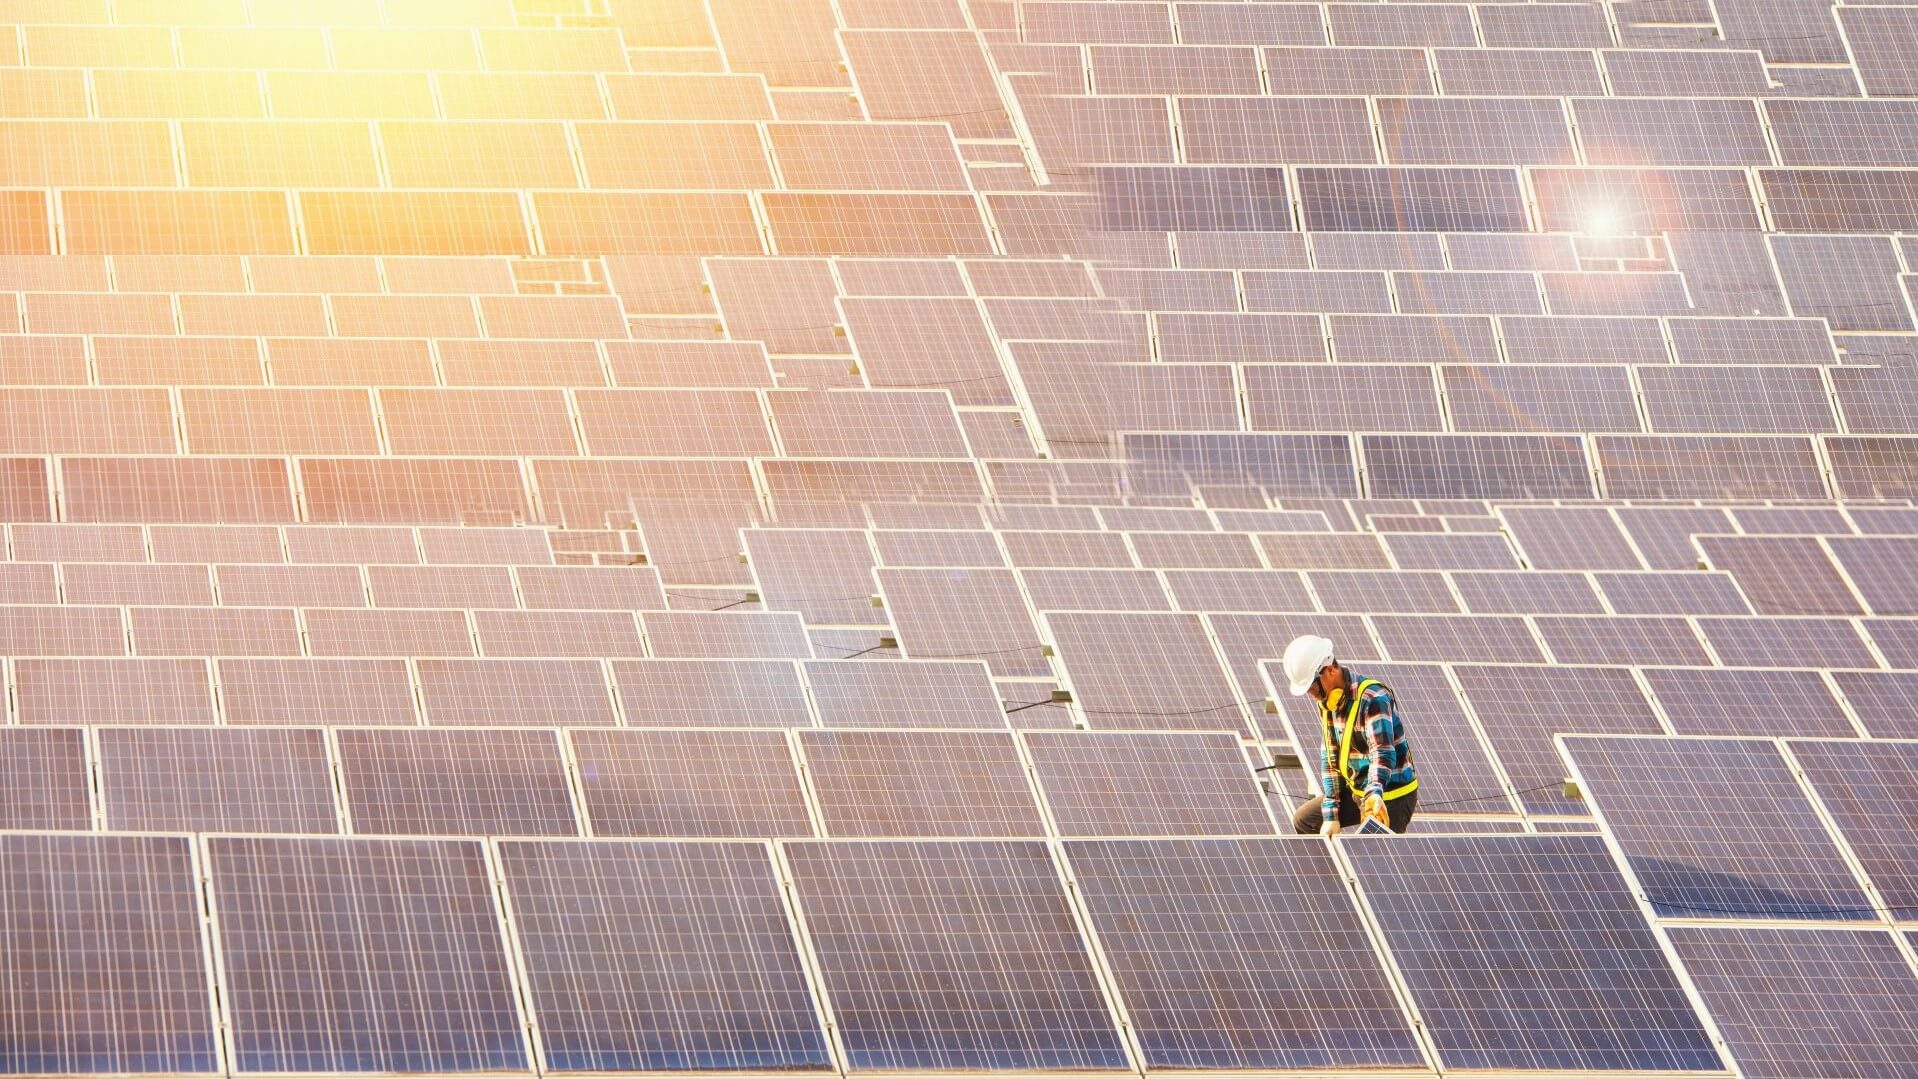 Engineer wearing hard hat, standing by solar panels in solar farm